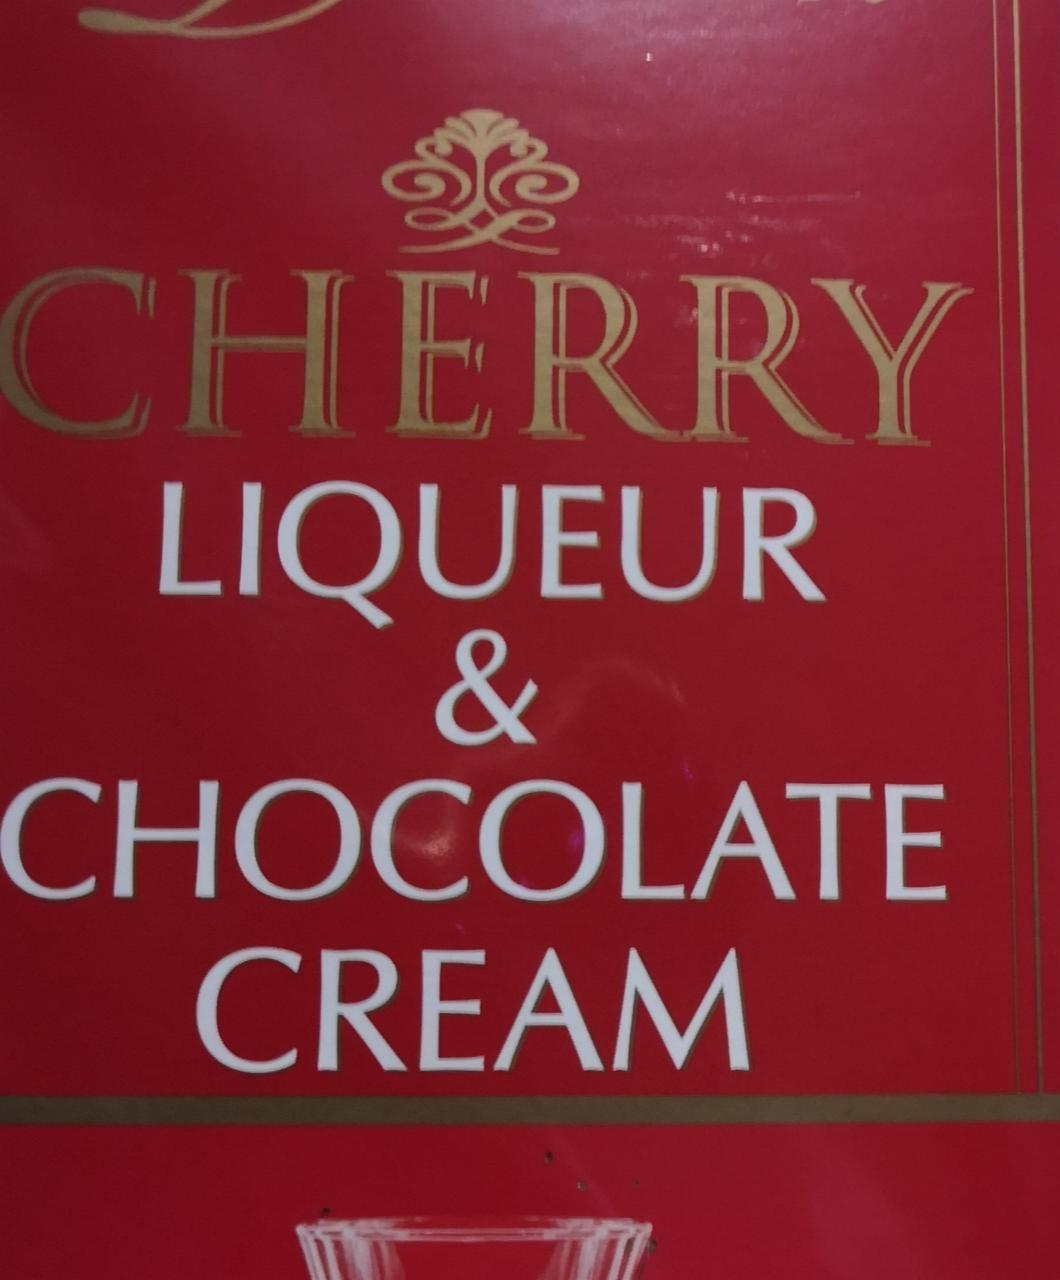 Fotografie - Cherry liqueur & chocolate cream Doulton